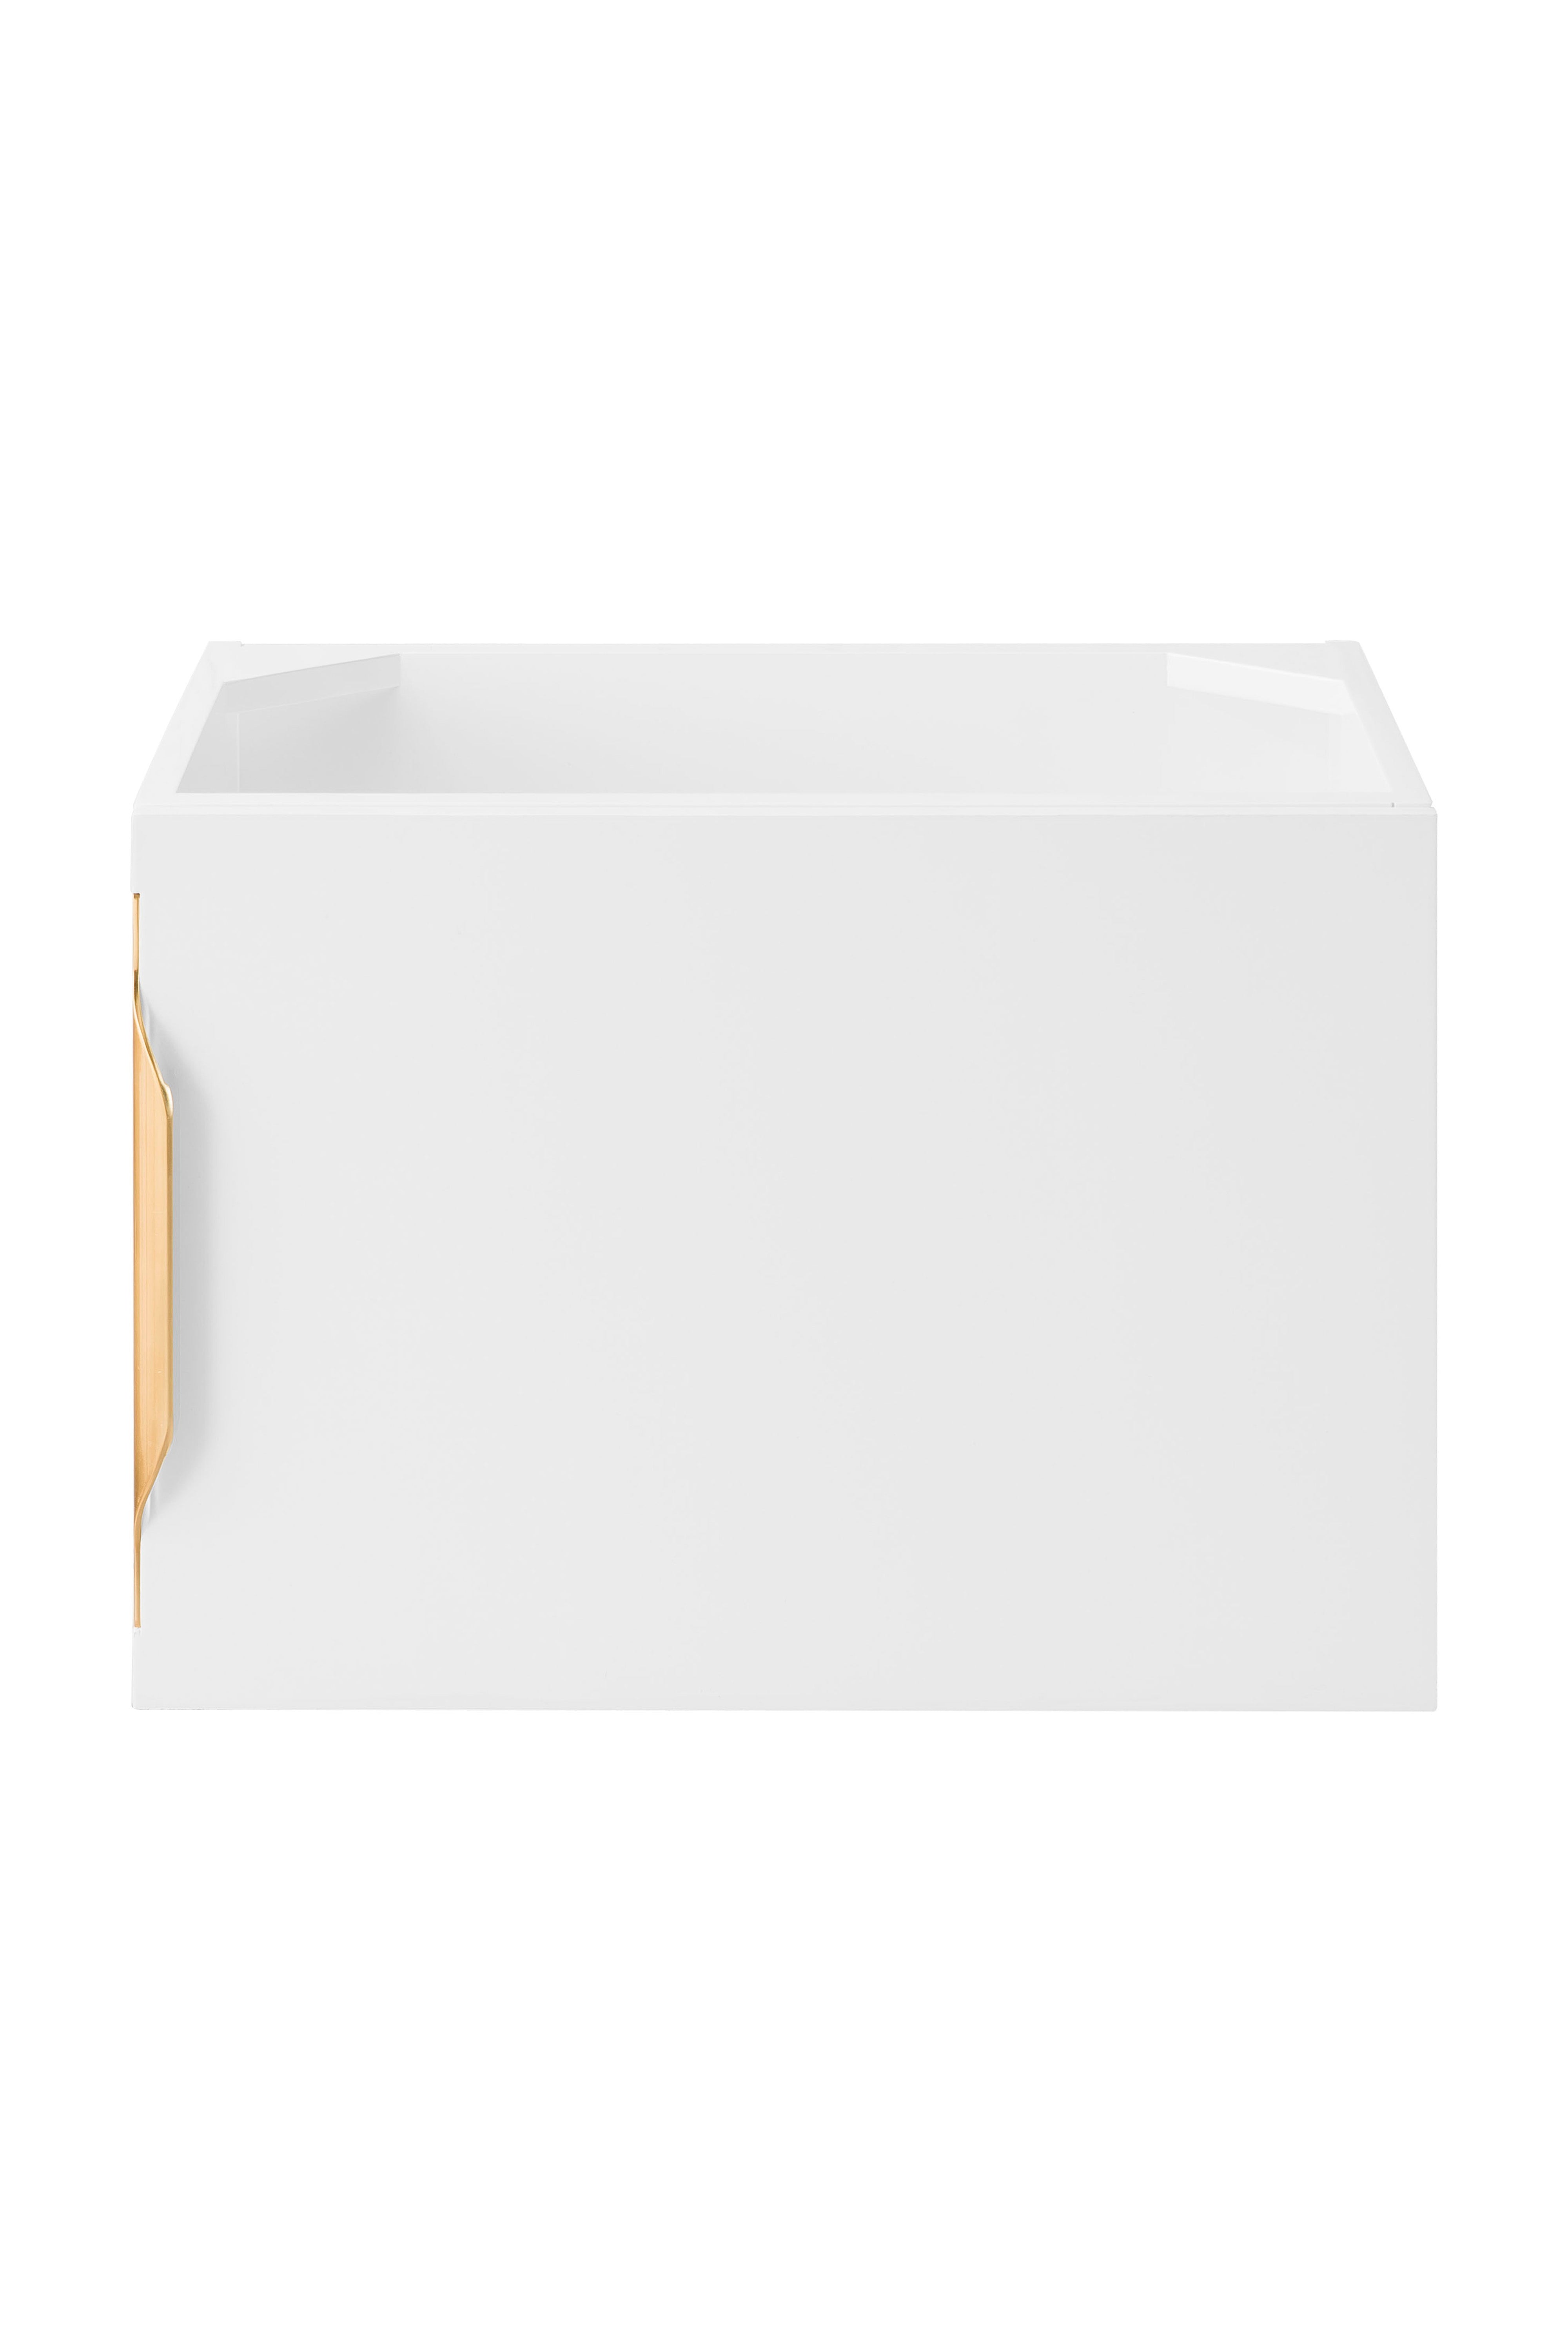 glossy white single vanity cabinet